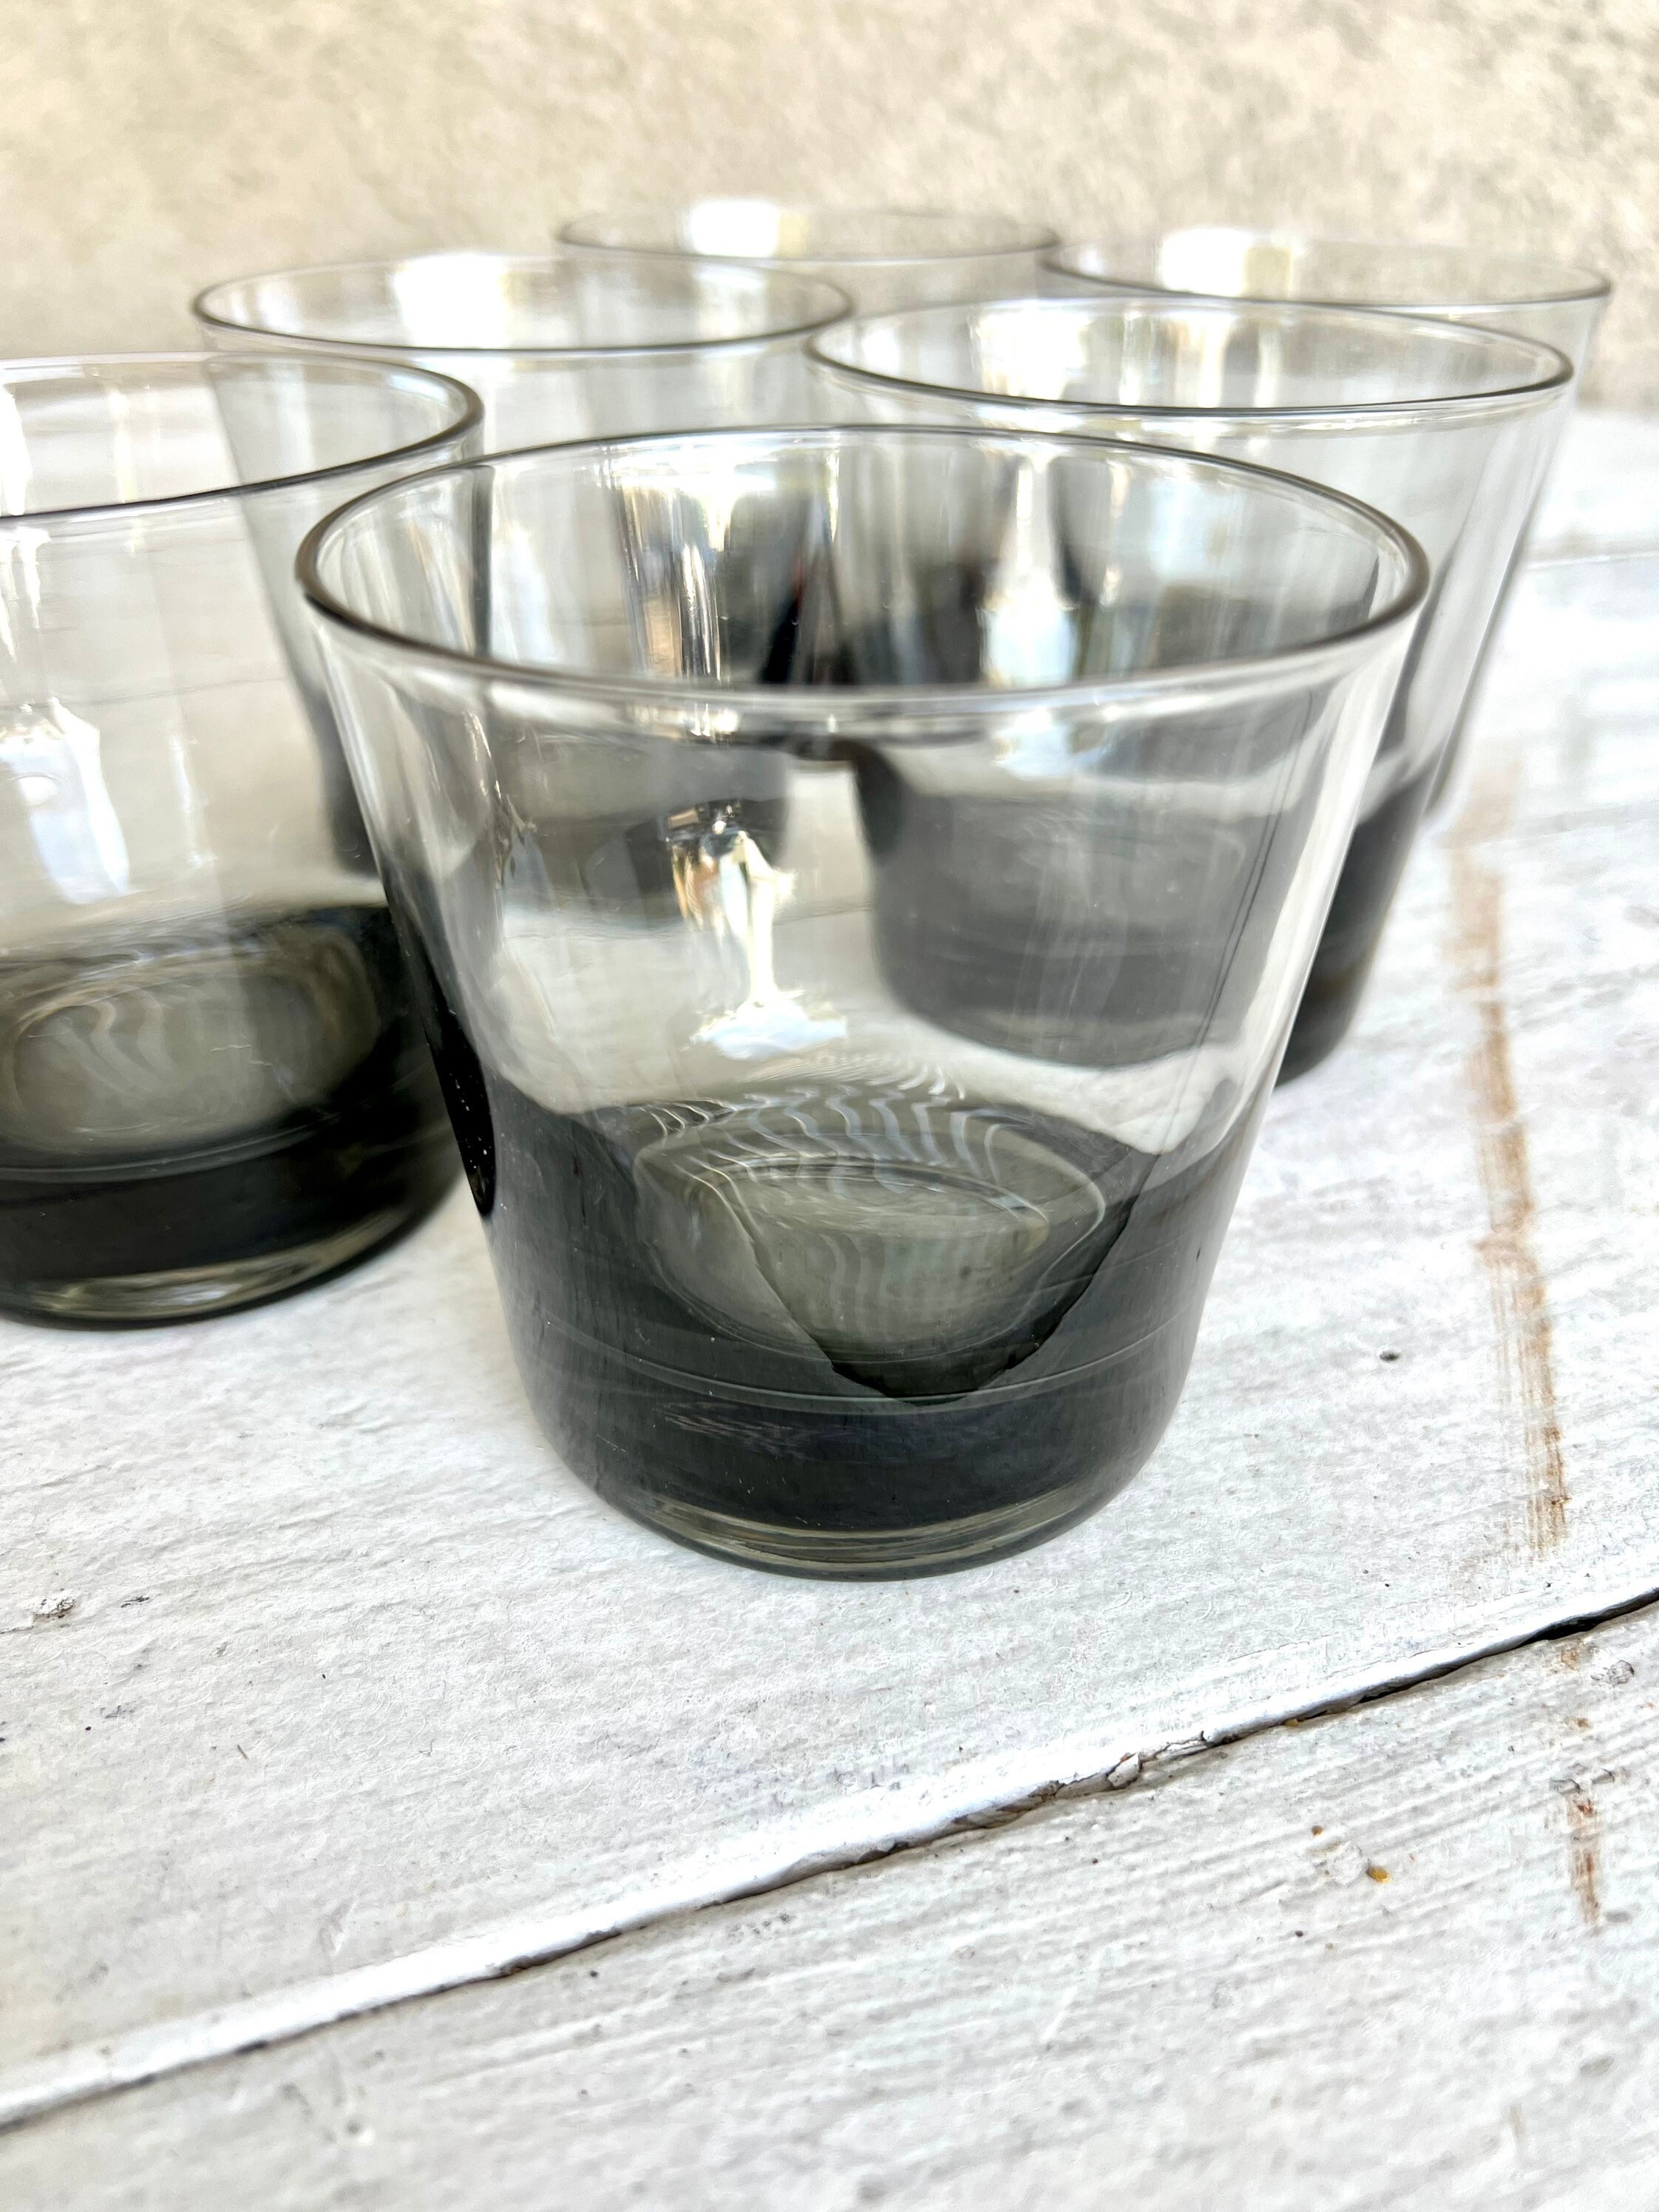 Greenline Goods Gray Goblet Glasses - Set Of 4 (10 oz) Vintage Water, Wine,  Drink Glassware Set - Modern Diamond Textured Drinking Glasses - Unique  Embossed Pattern - Unique Stemmed Glassware - Yahoo Shopping